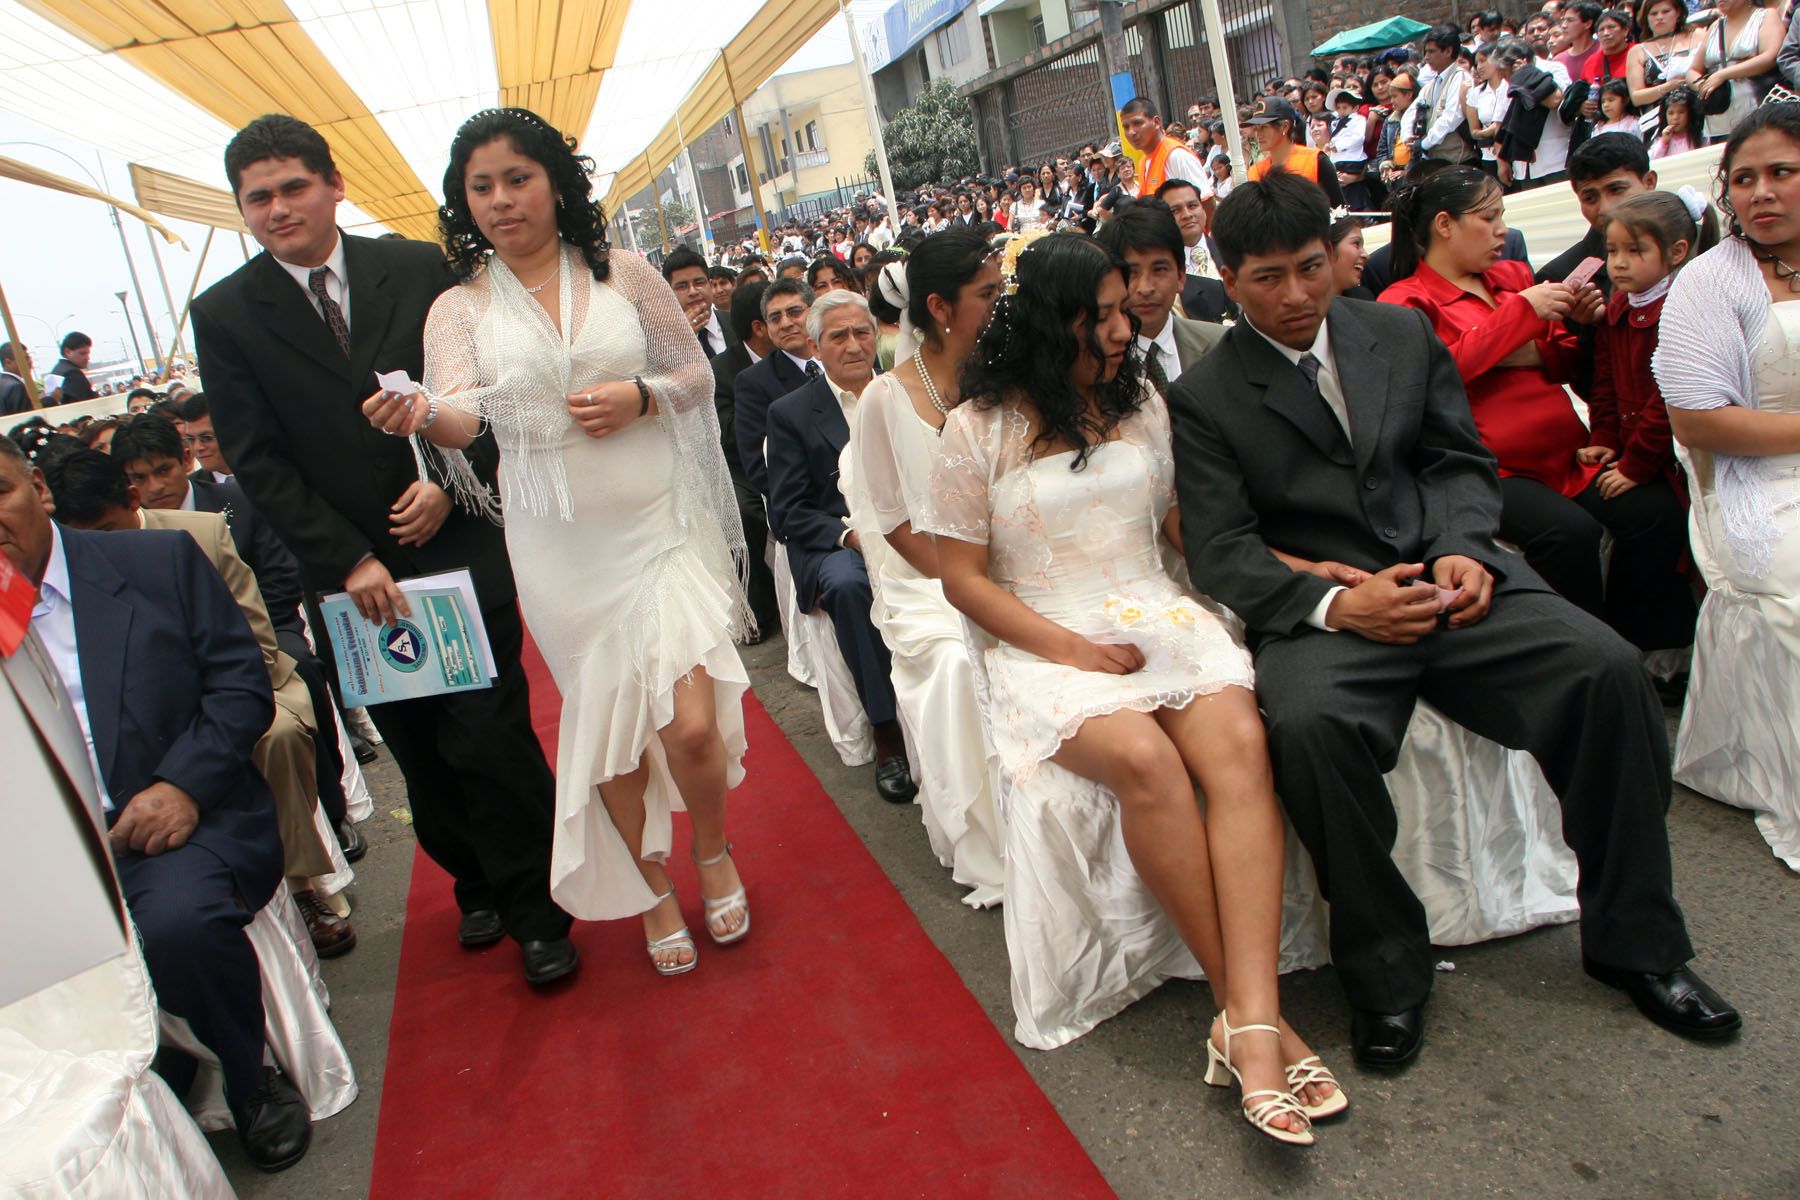 Matrimonios masivos costarán 80 soles en San Luis. Foto: ANDINA/Archivo.